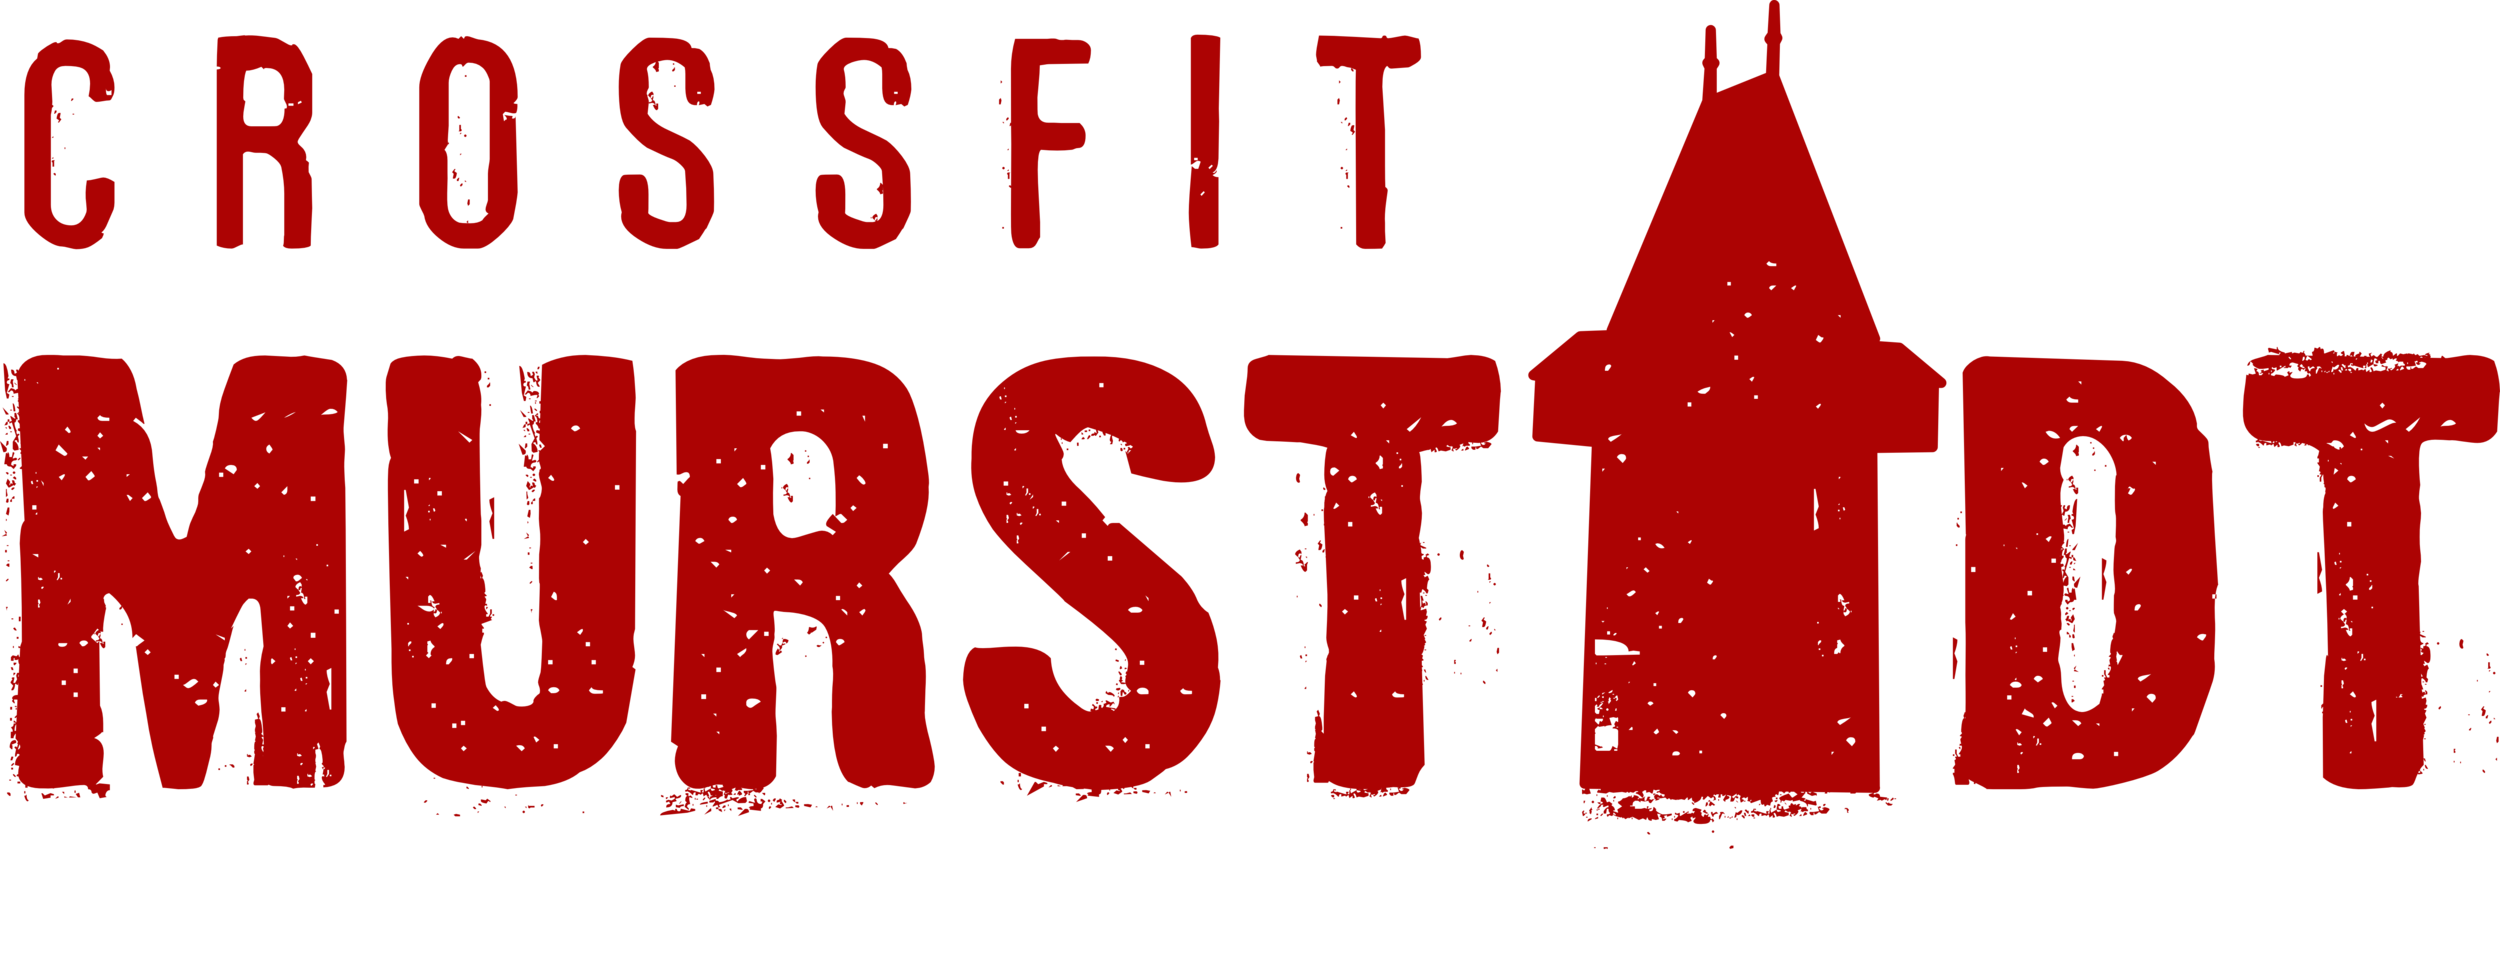 CrossFit Murstadt